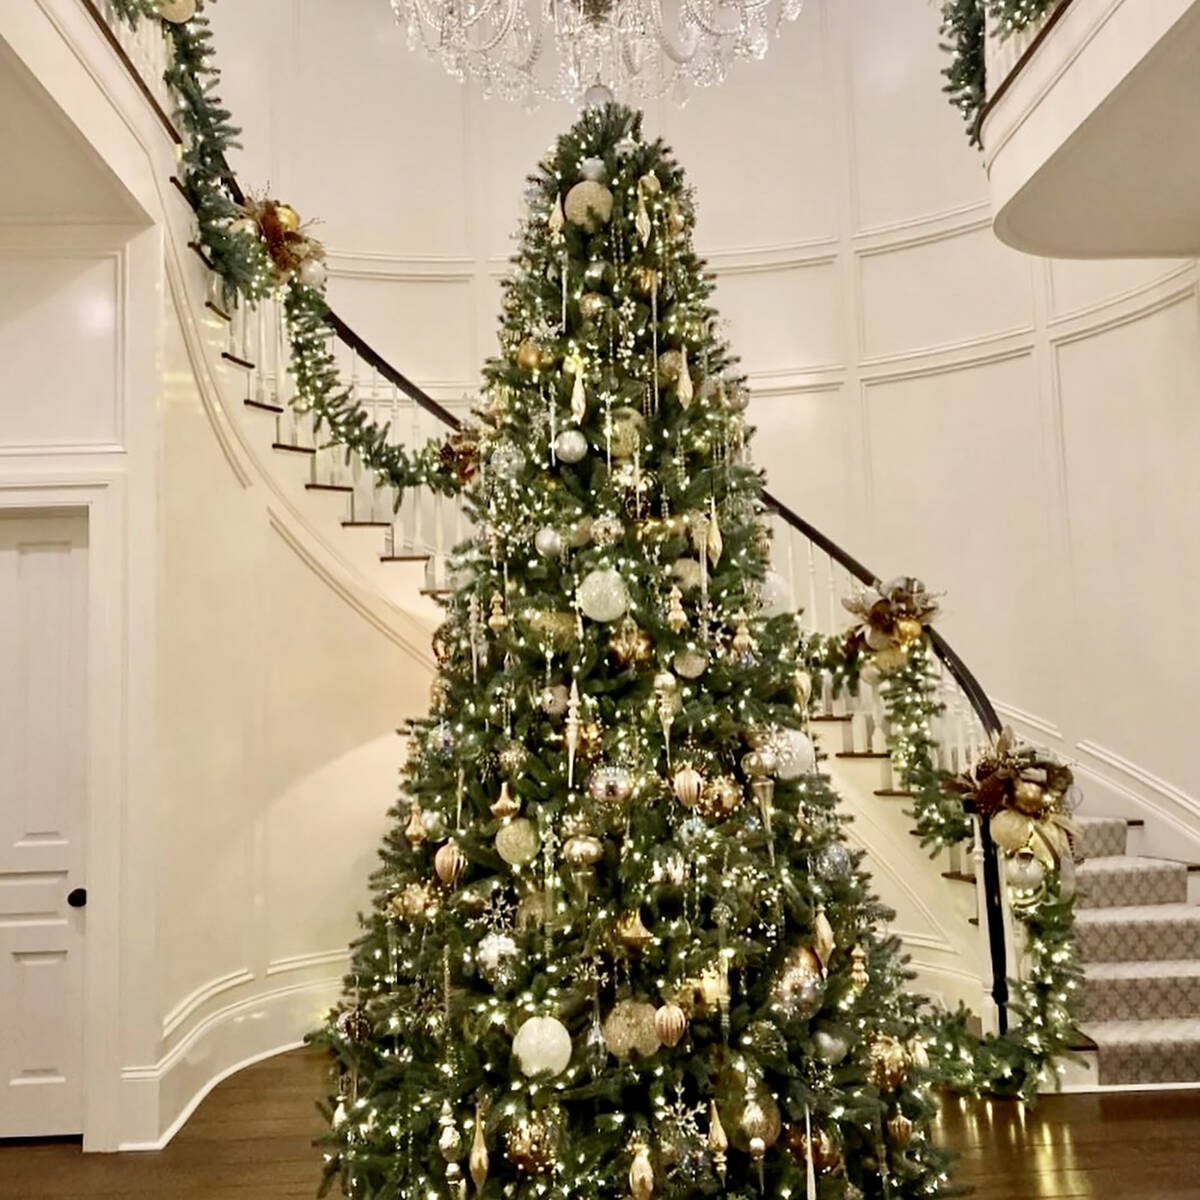 This Kentucky home has six Christmas trees. (Christopher Todd)